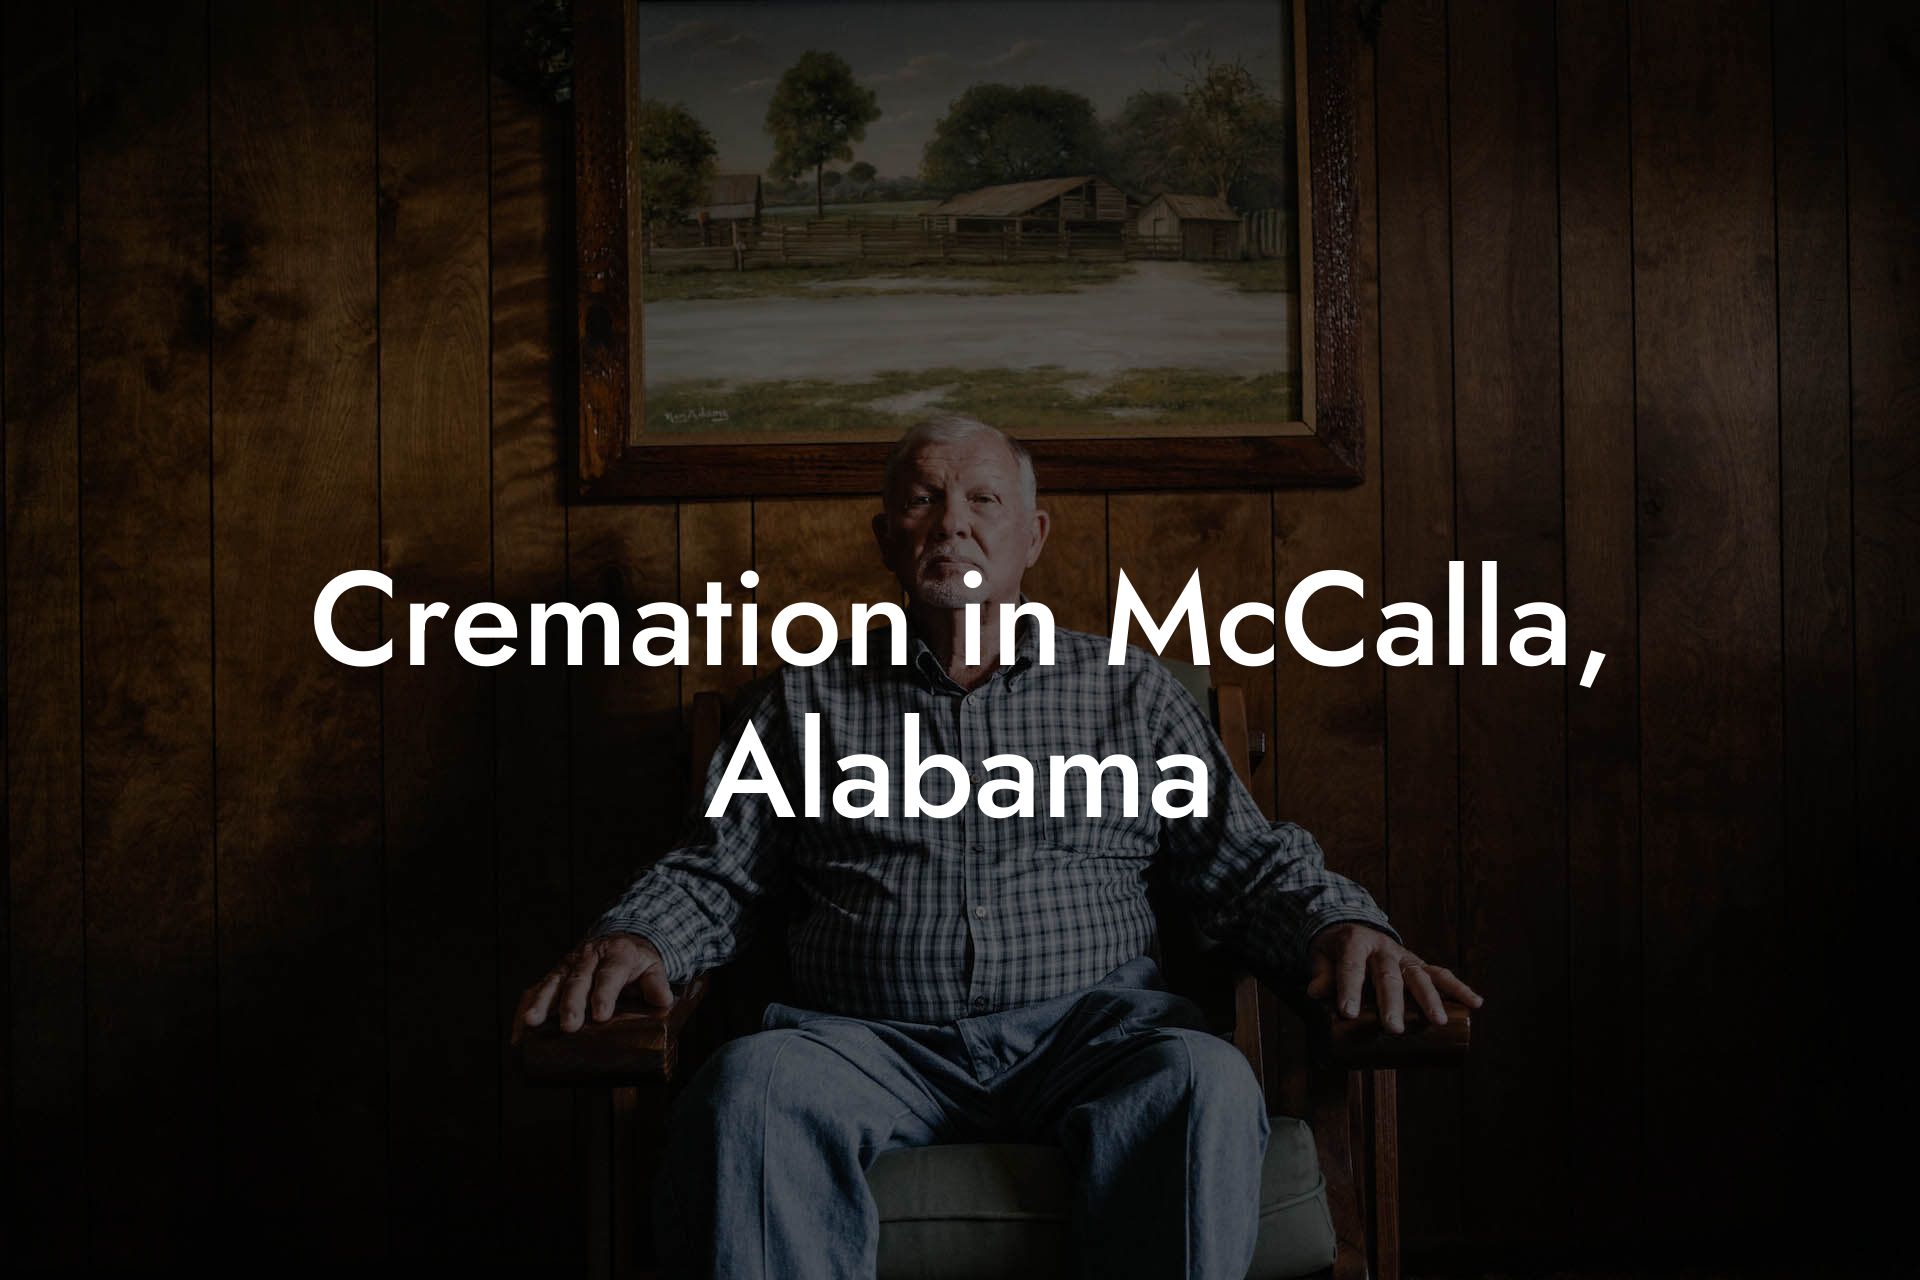 Cremation in McCalla, Alabama